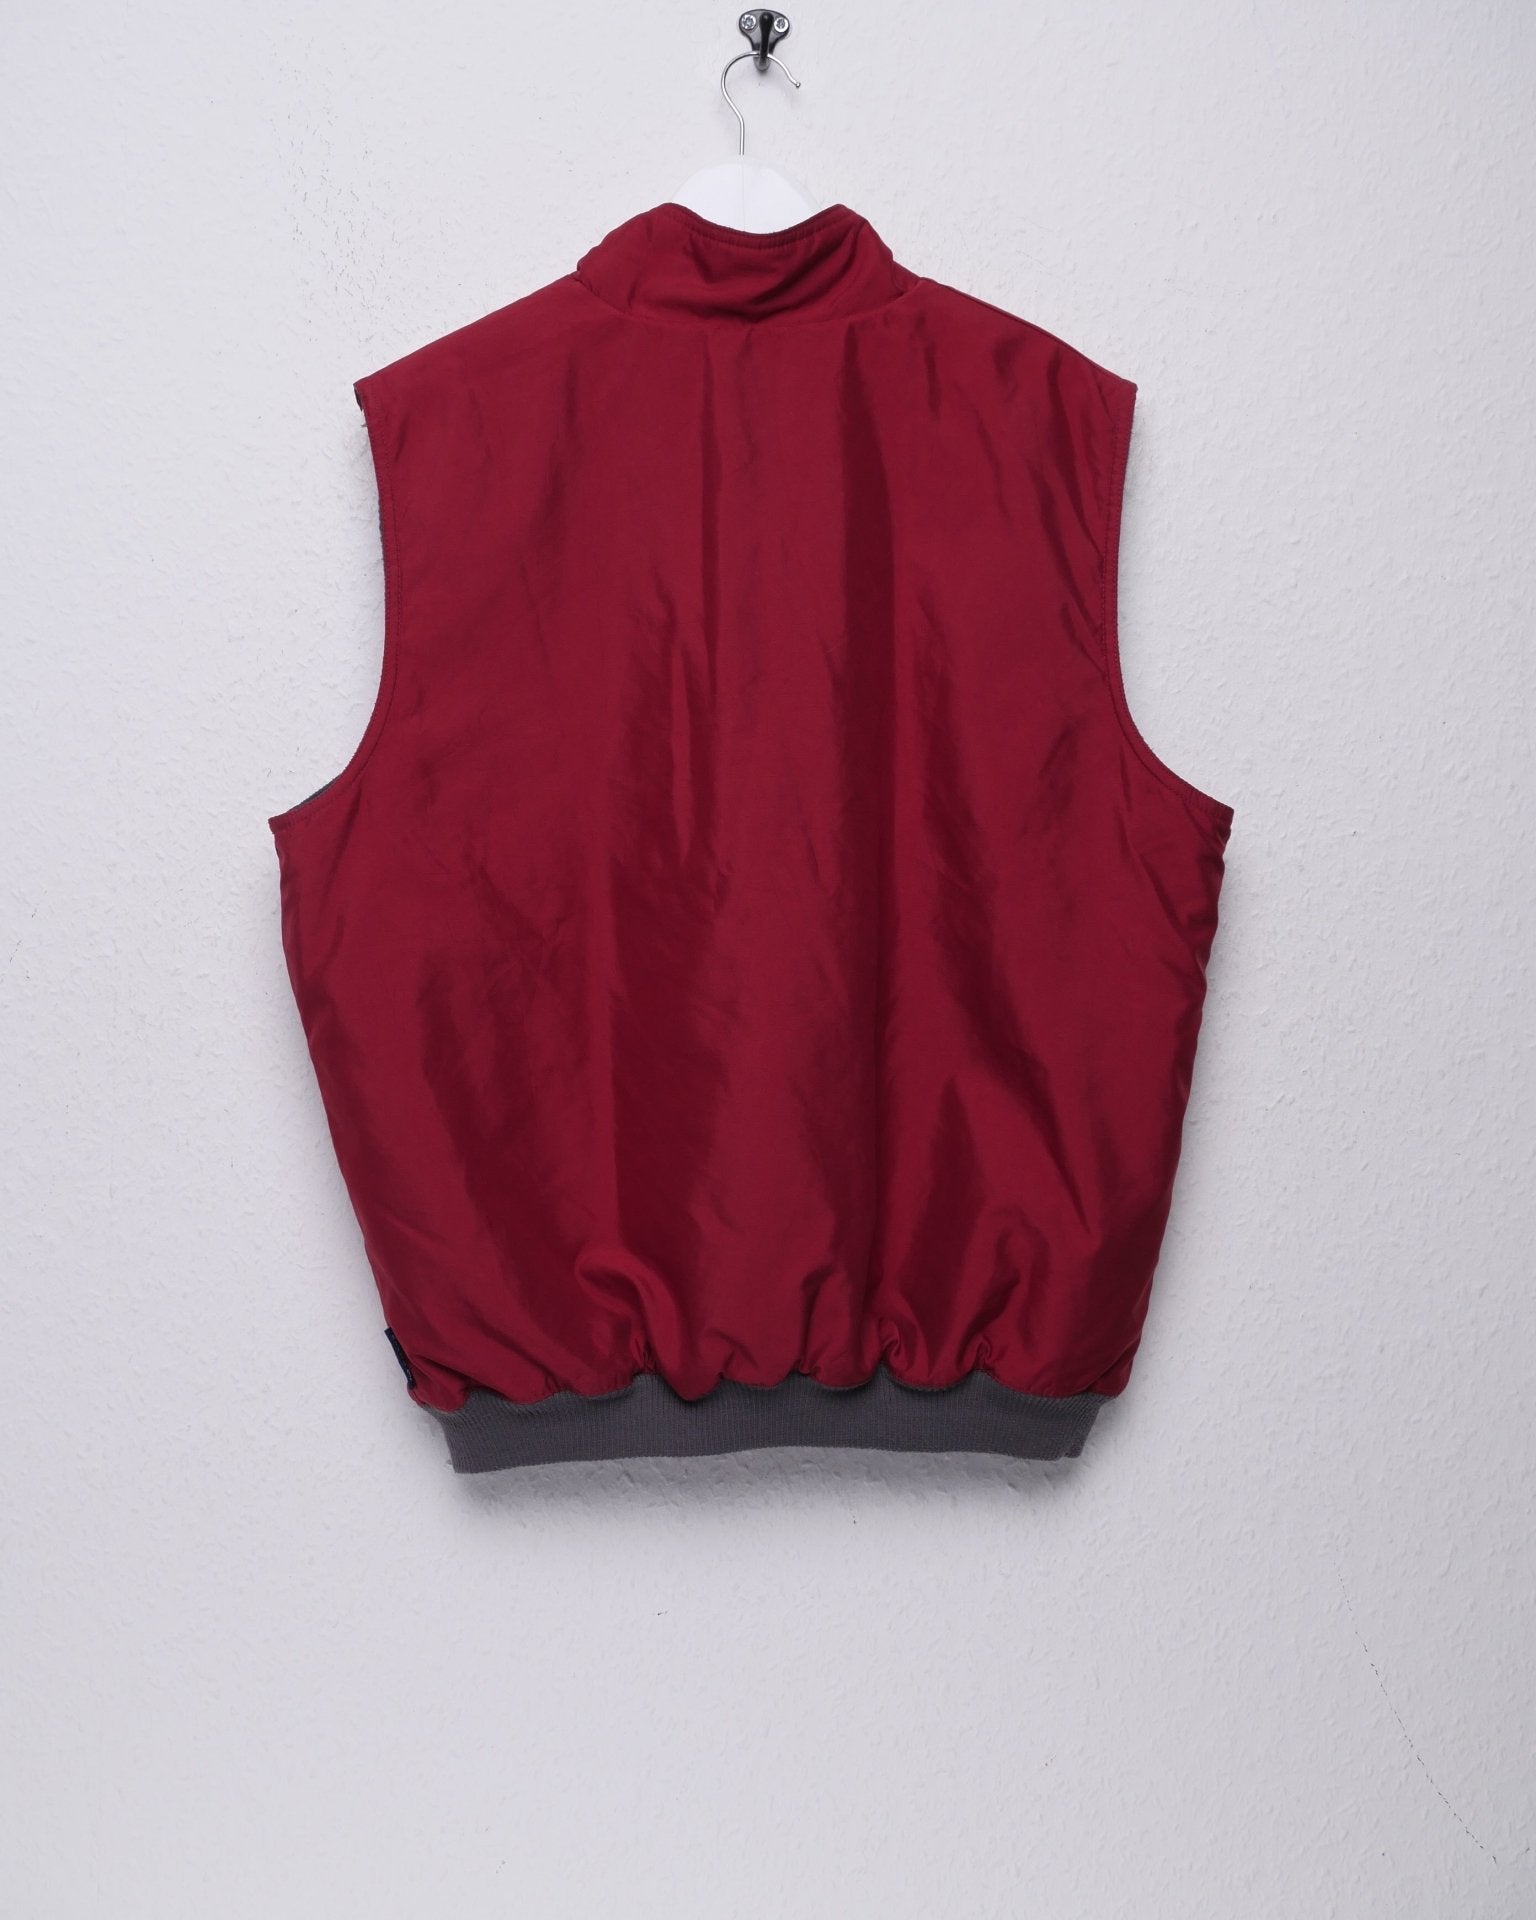 Chaps red Heavy Vest Jacket - Peeces